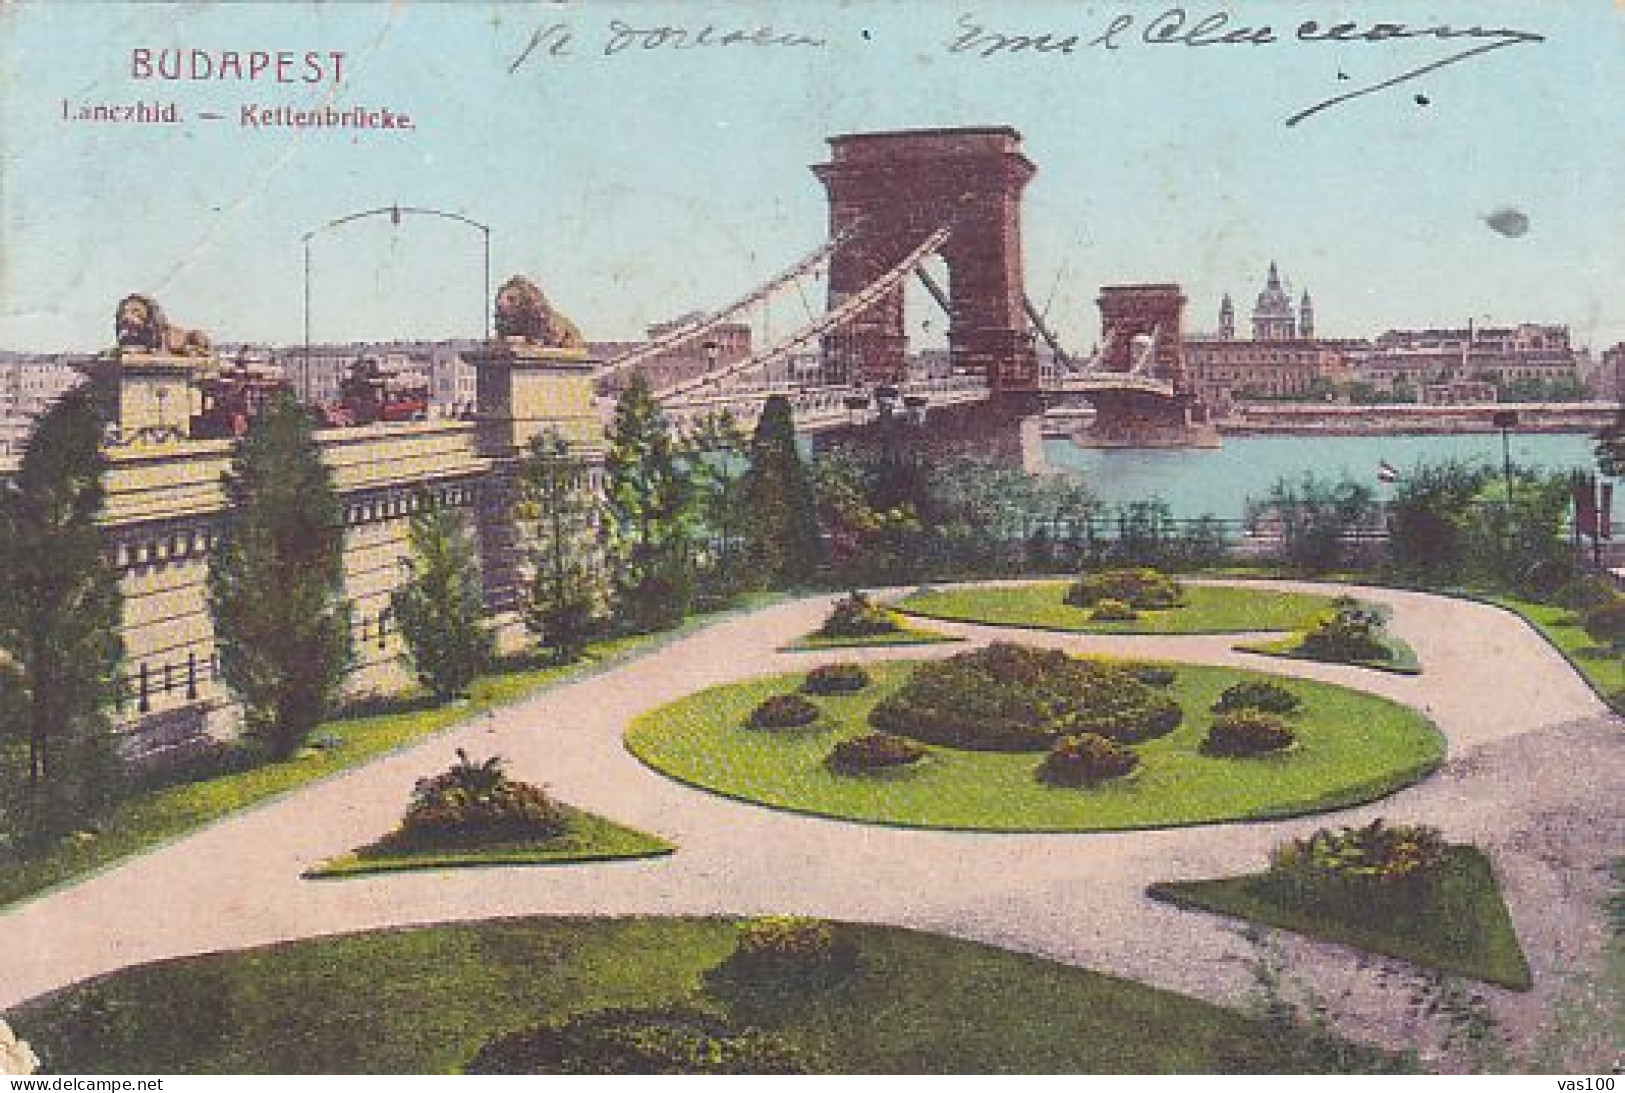 POSTAGE DUE, PORTO STAMPS ON BUDAPEST CHAIN BRIDGE POSTCARD, 1907, ROMANIA - Strafport